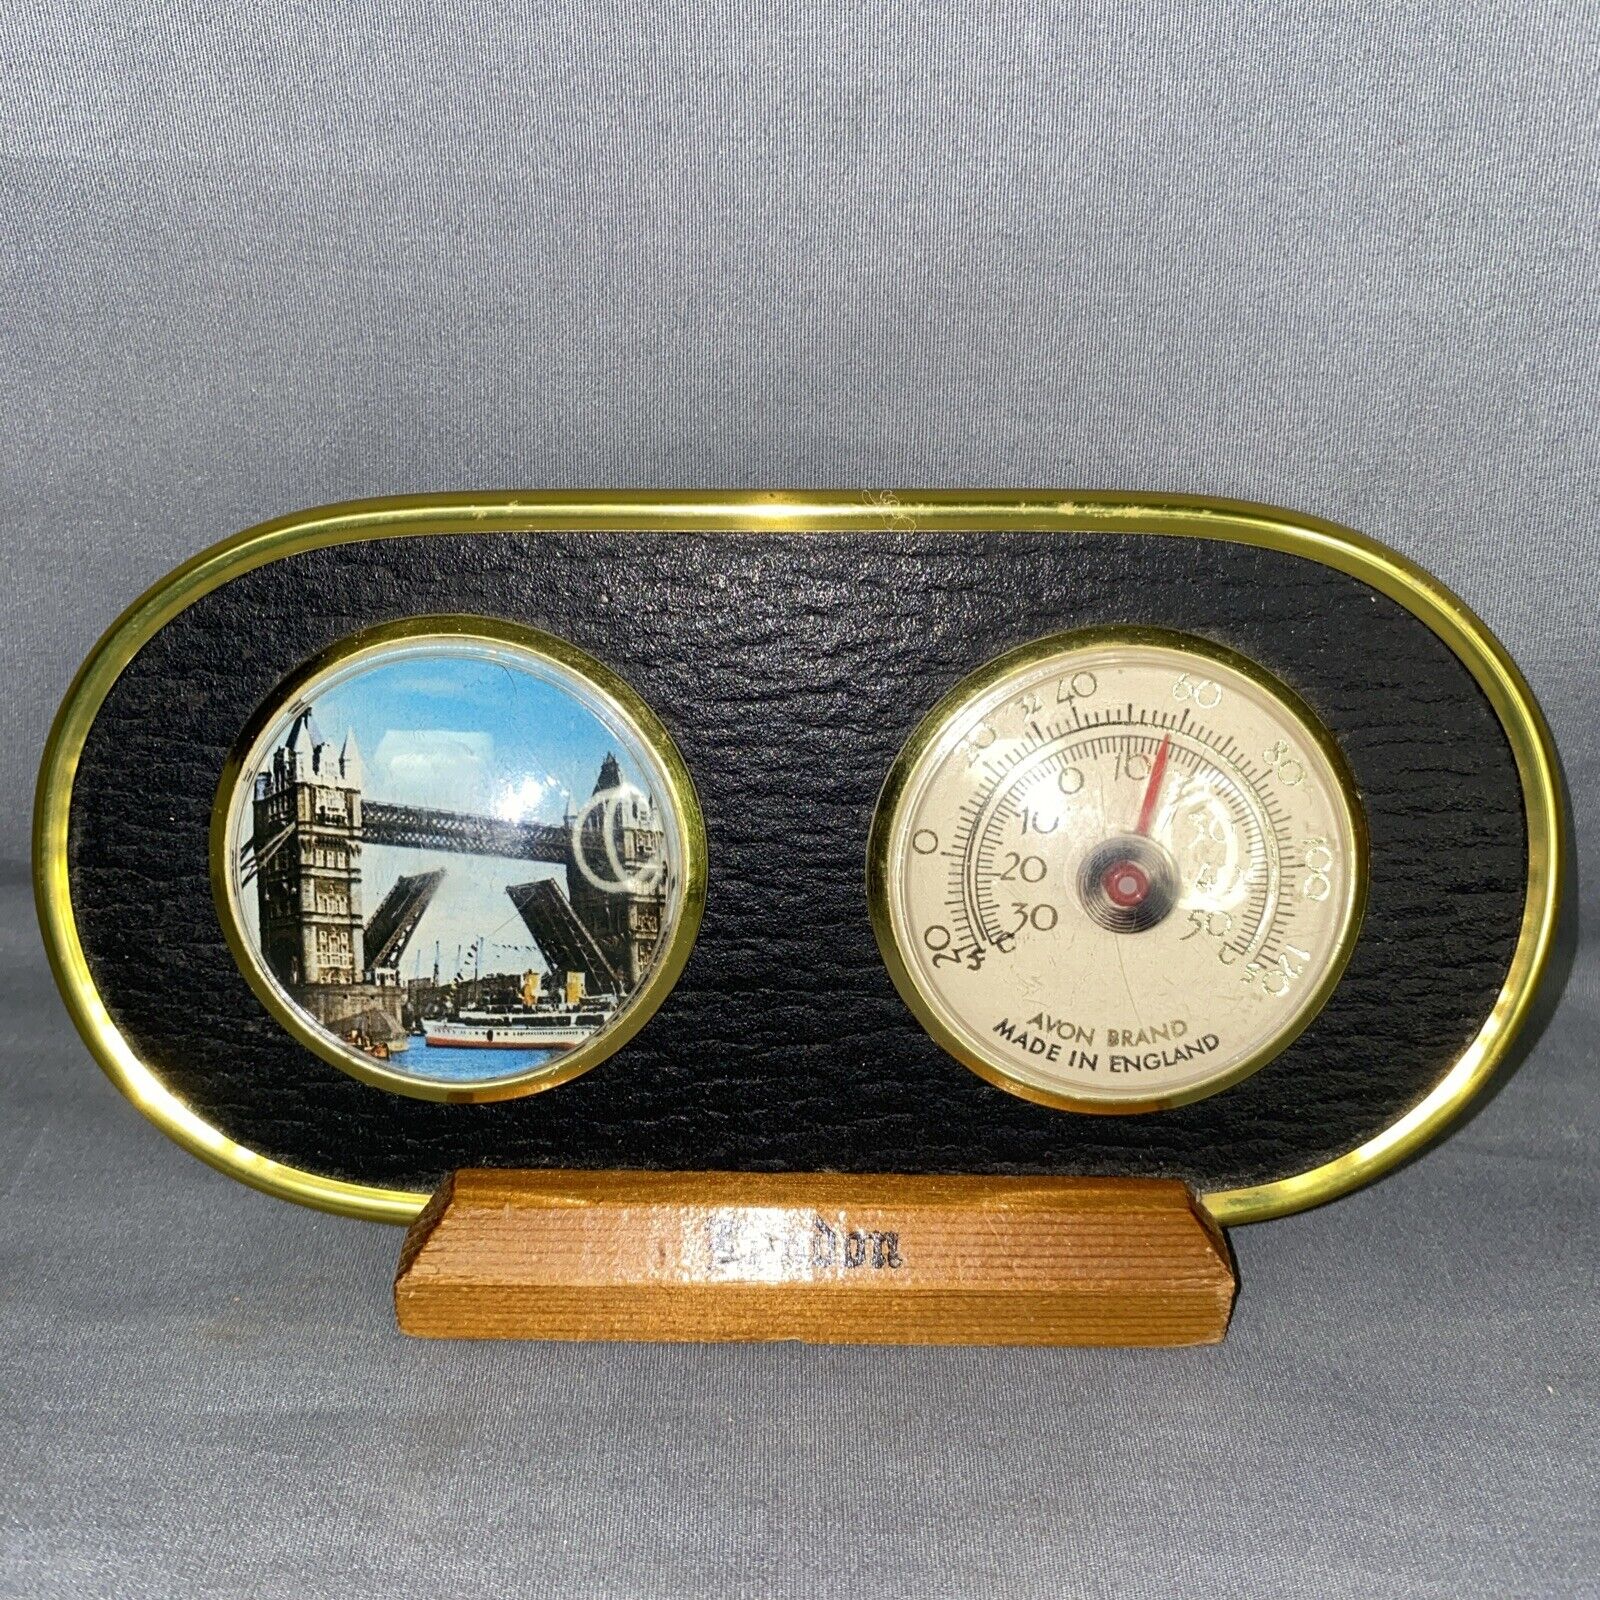 Avon Brand Vintage Thermometer London, England Bridge